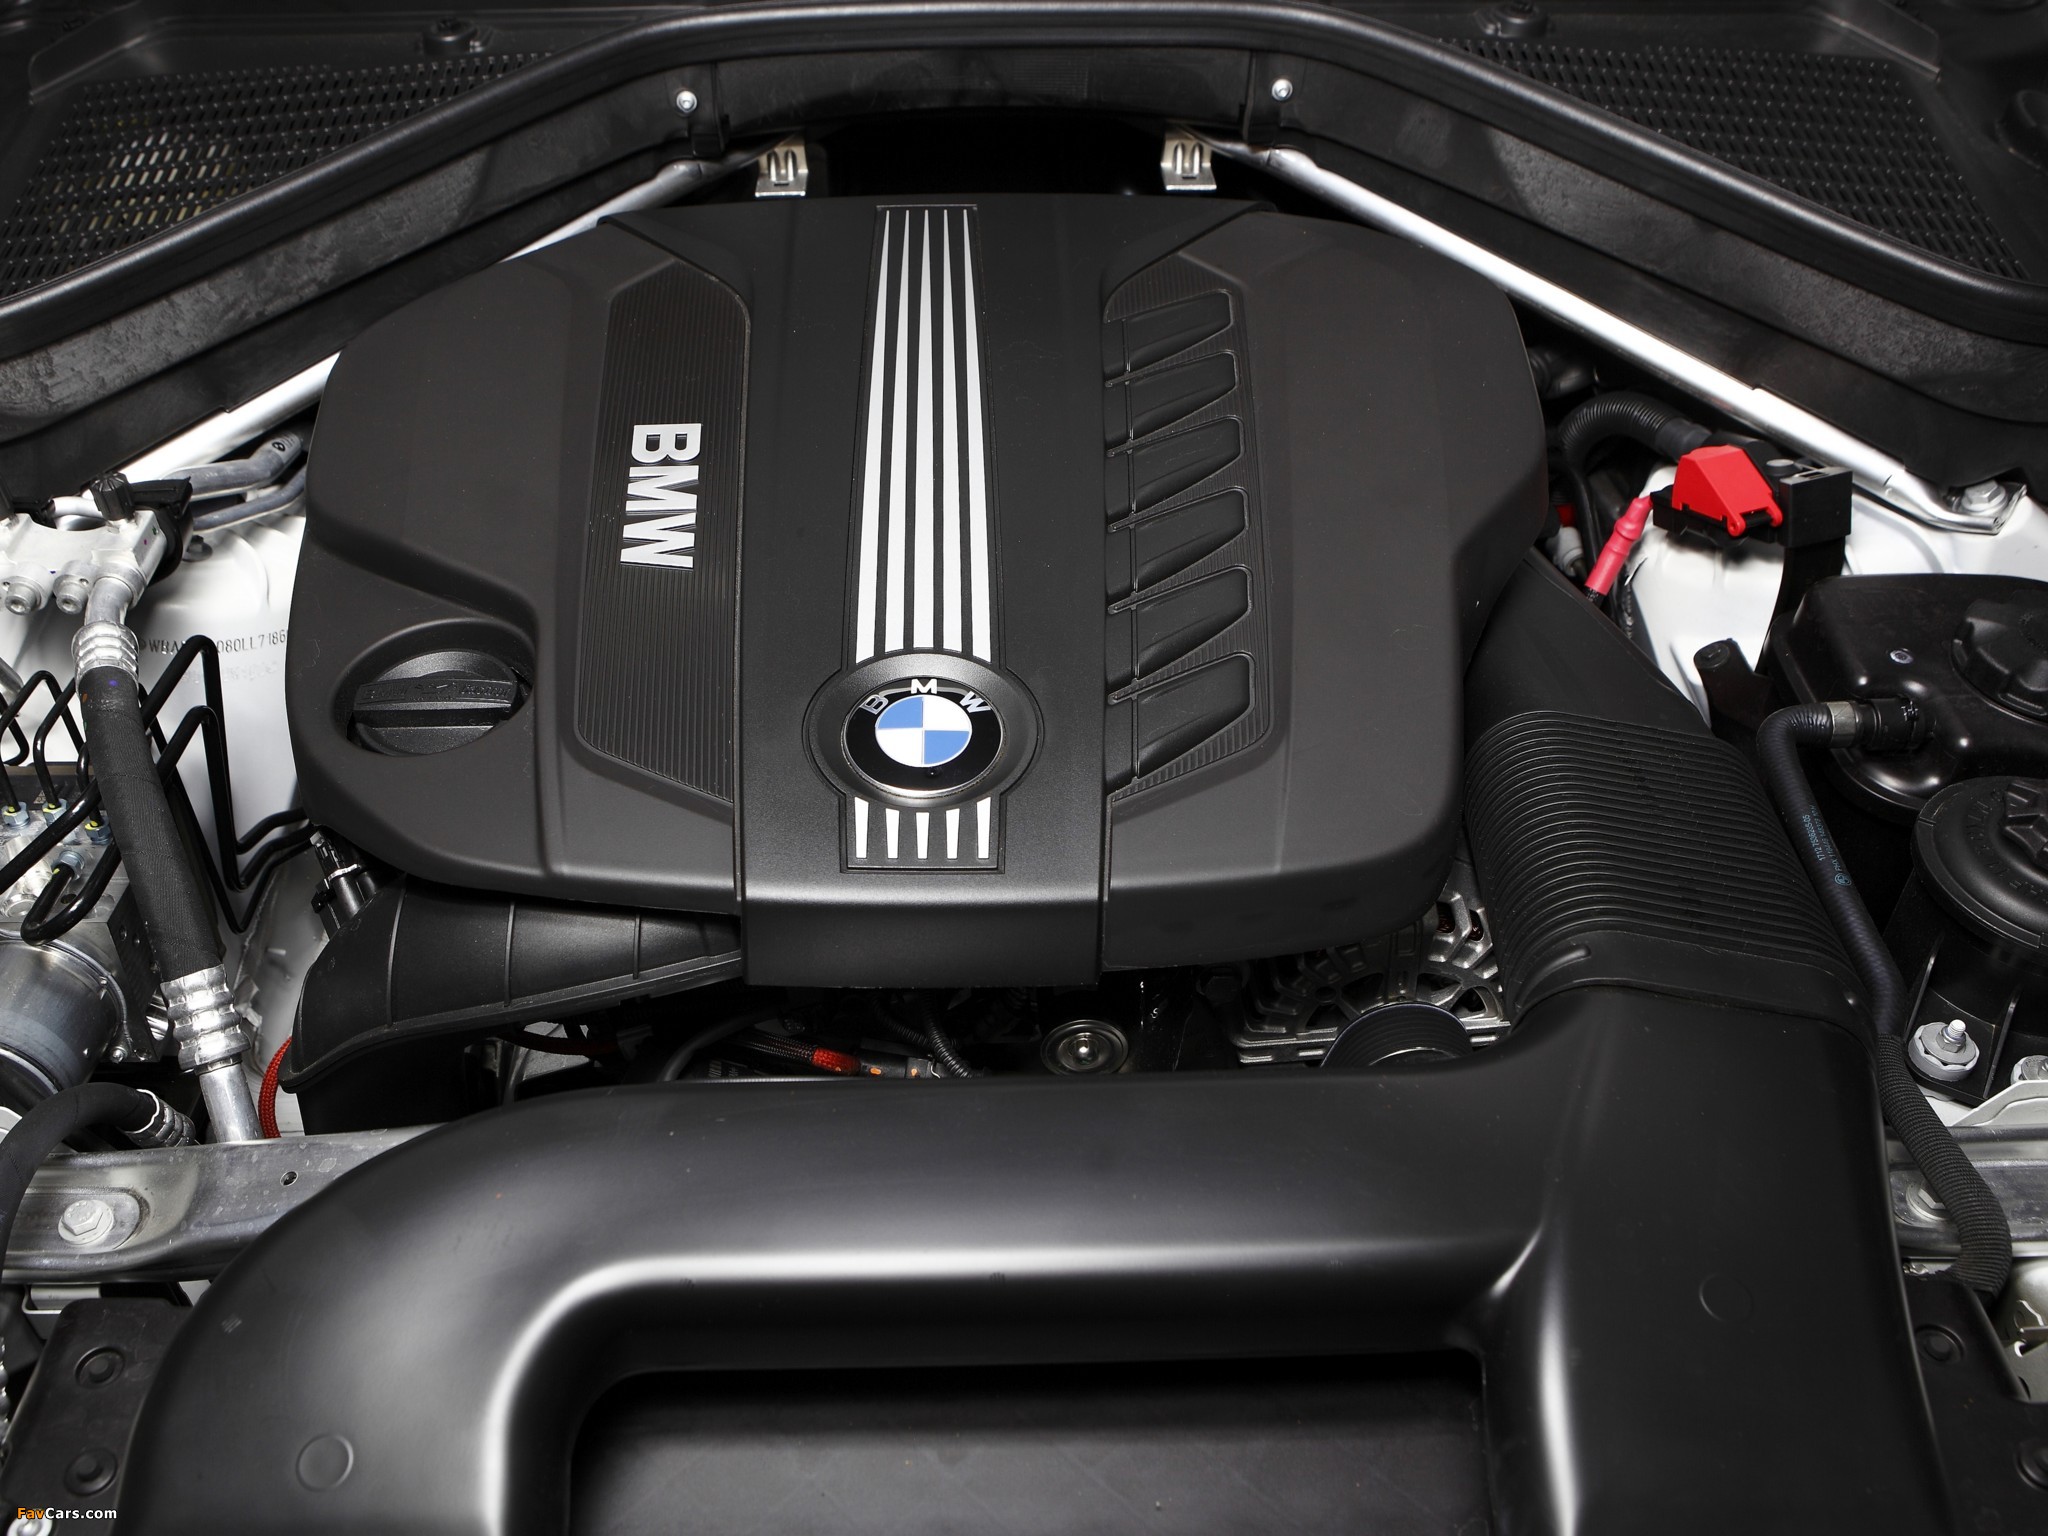 Двигатель бмв x6. BMW x6 e71 под капотом. BMW x6 f16 мотор. Мотор BMW x6 40d. BMW x6 xdrive30d двигатель.